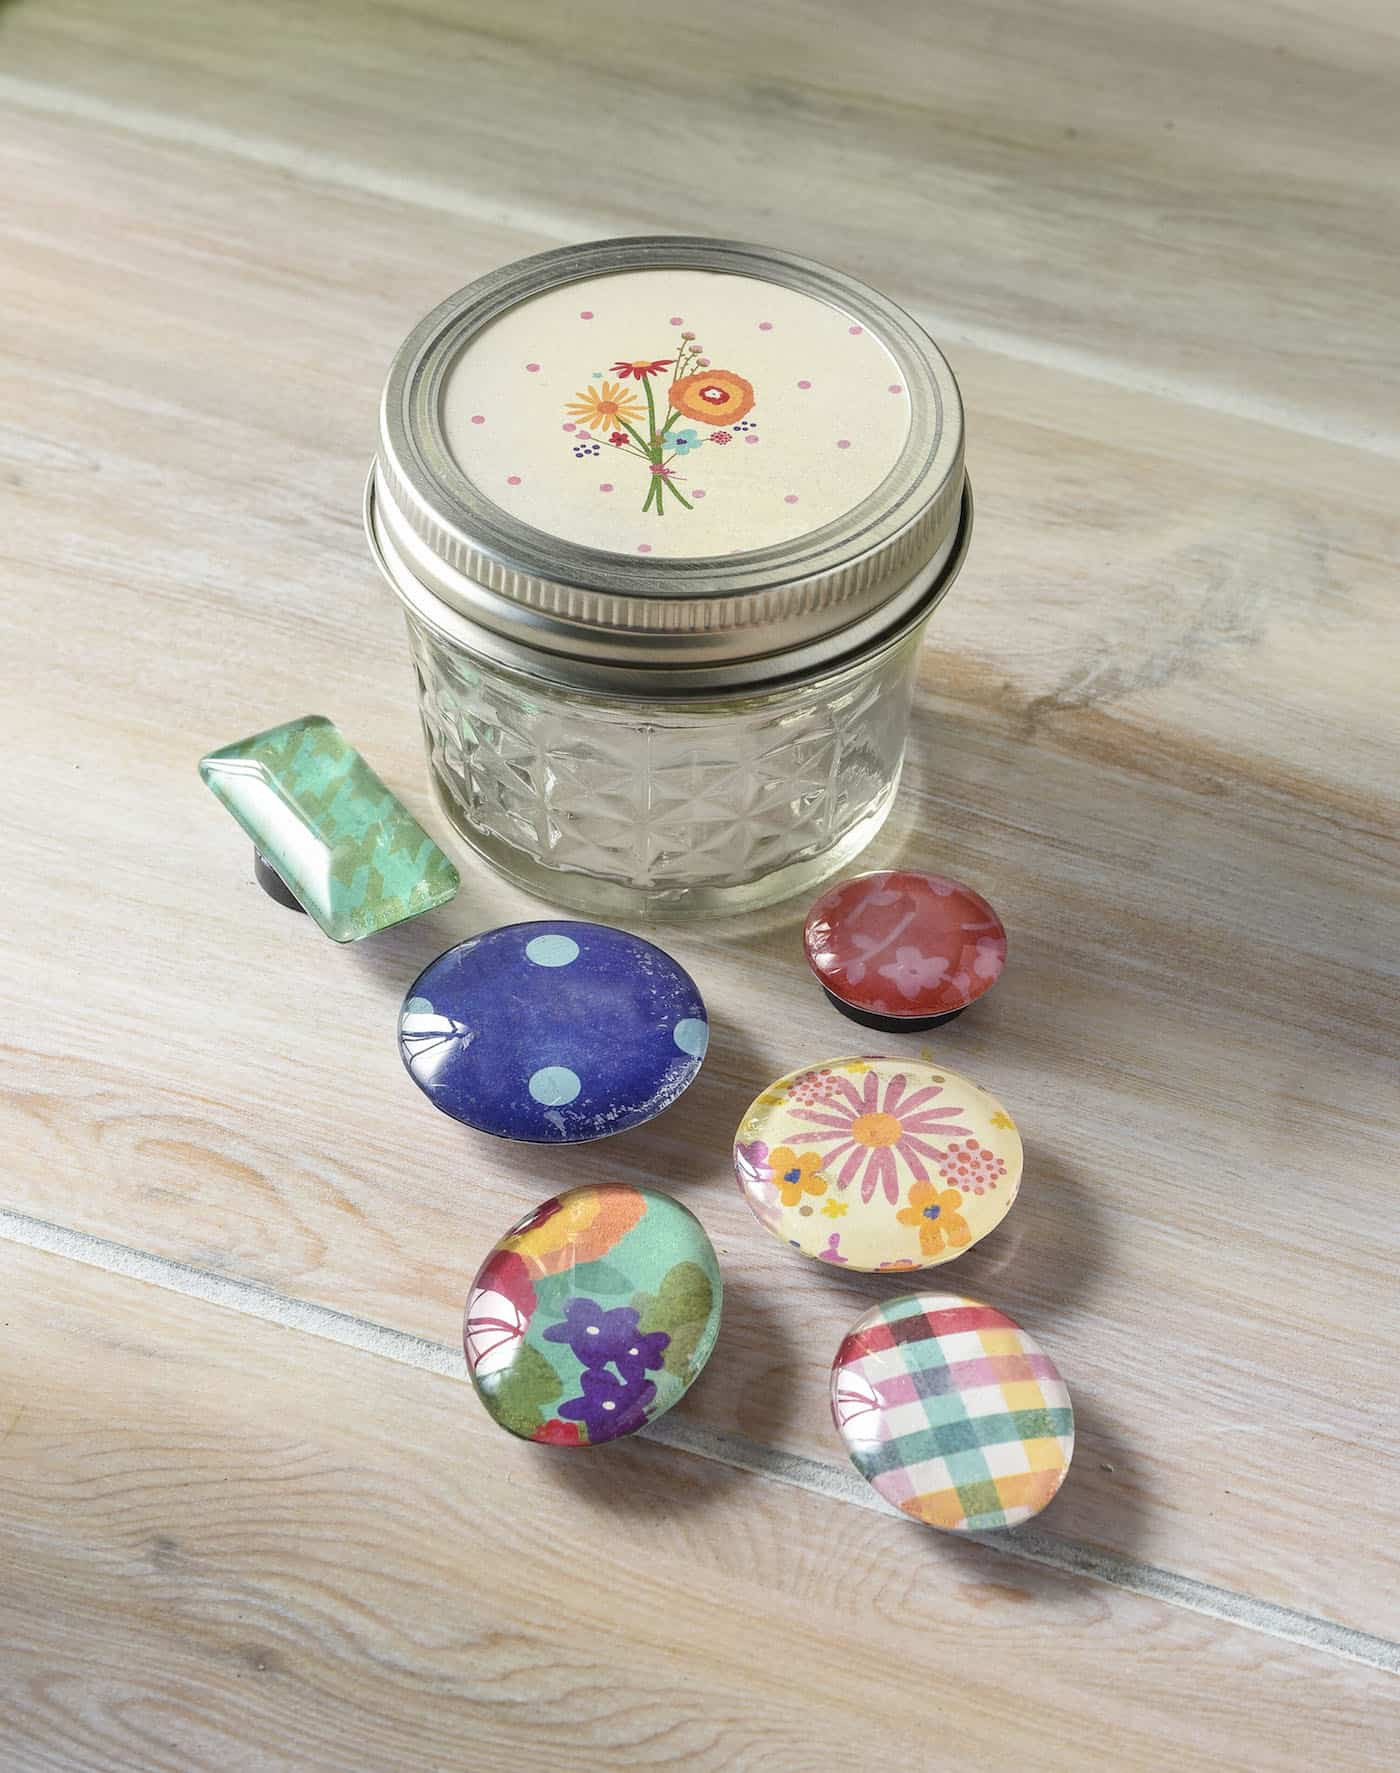 Best ideas about DIY Mason Jar Crafts
. Save or Pin Mason Jar Gifts Easy Handmade Magnets Mod Podge Rocks Now.